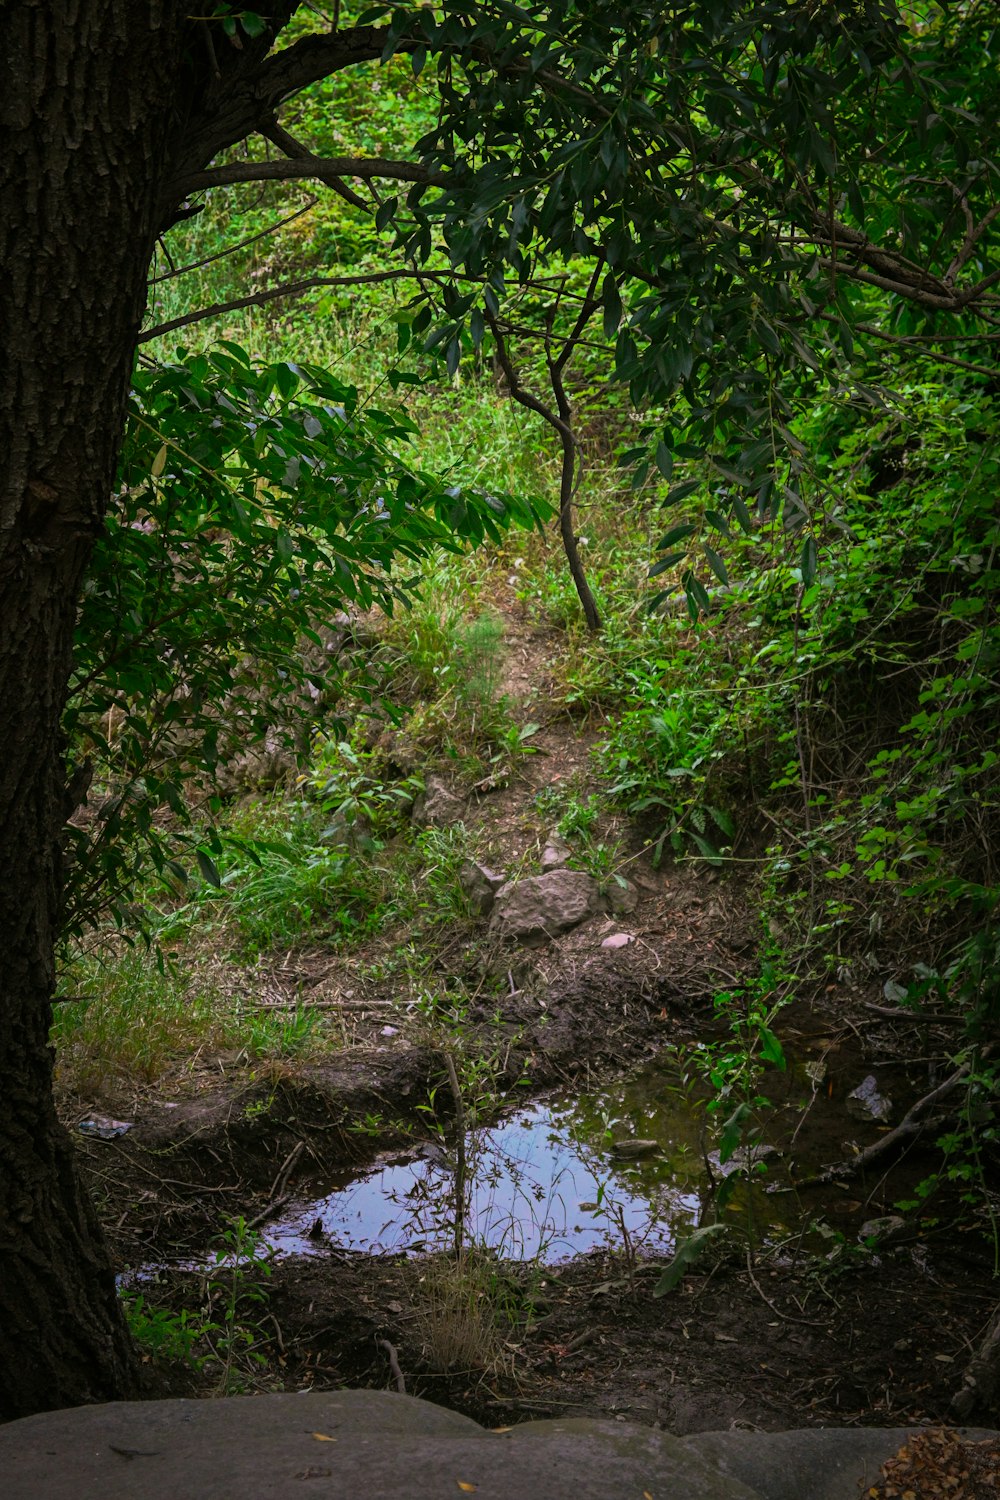 a small stream running through a lush green forest